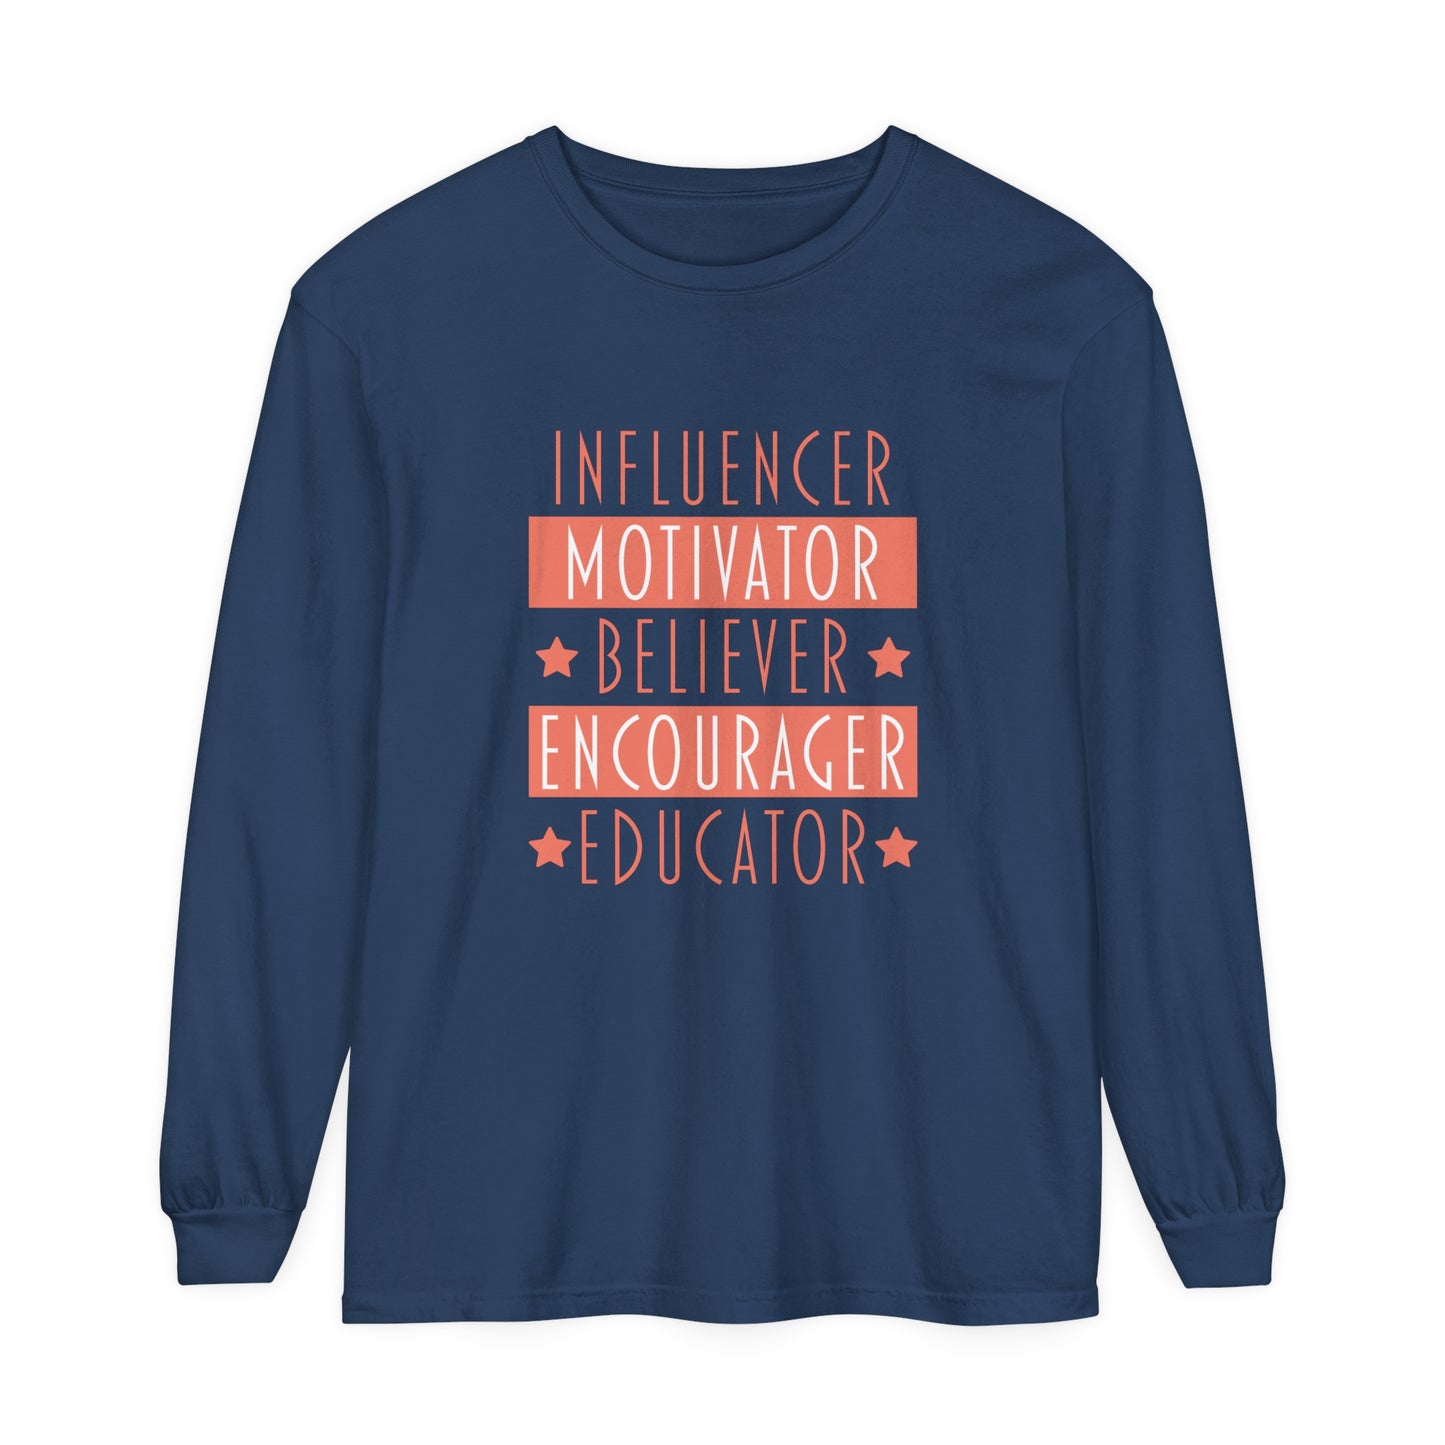 Influencer Motivator Believer Encourager Educator Women's Long Sleeve T-Shirt